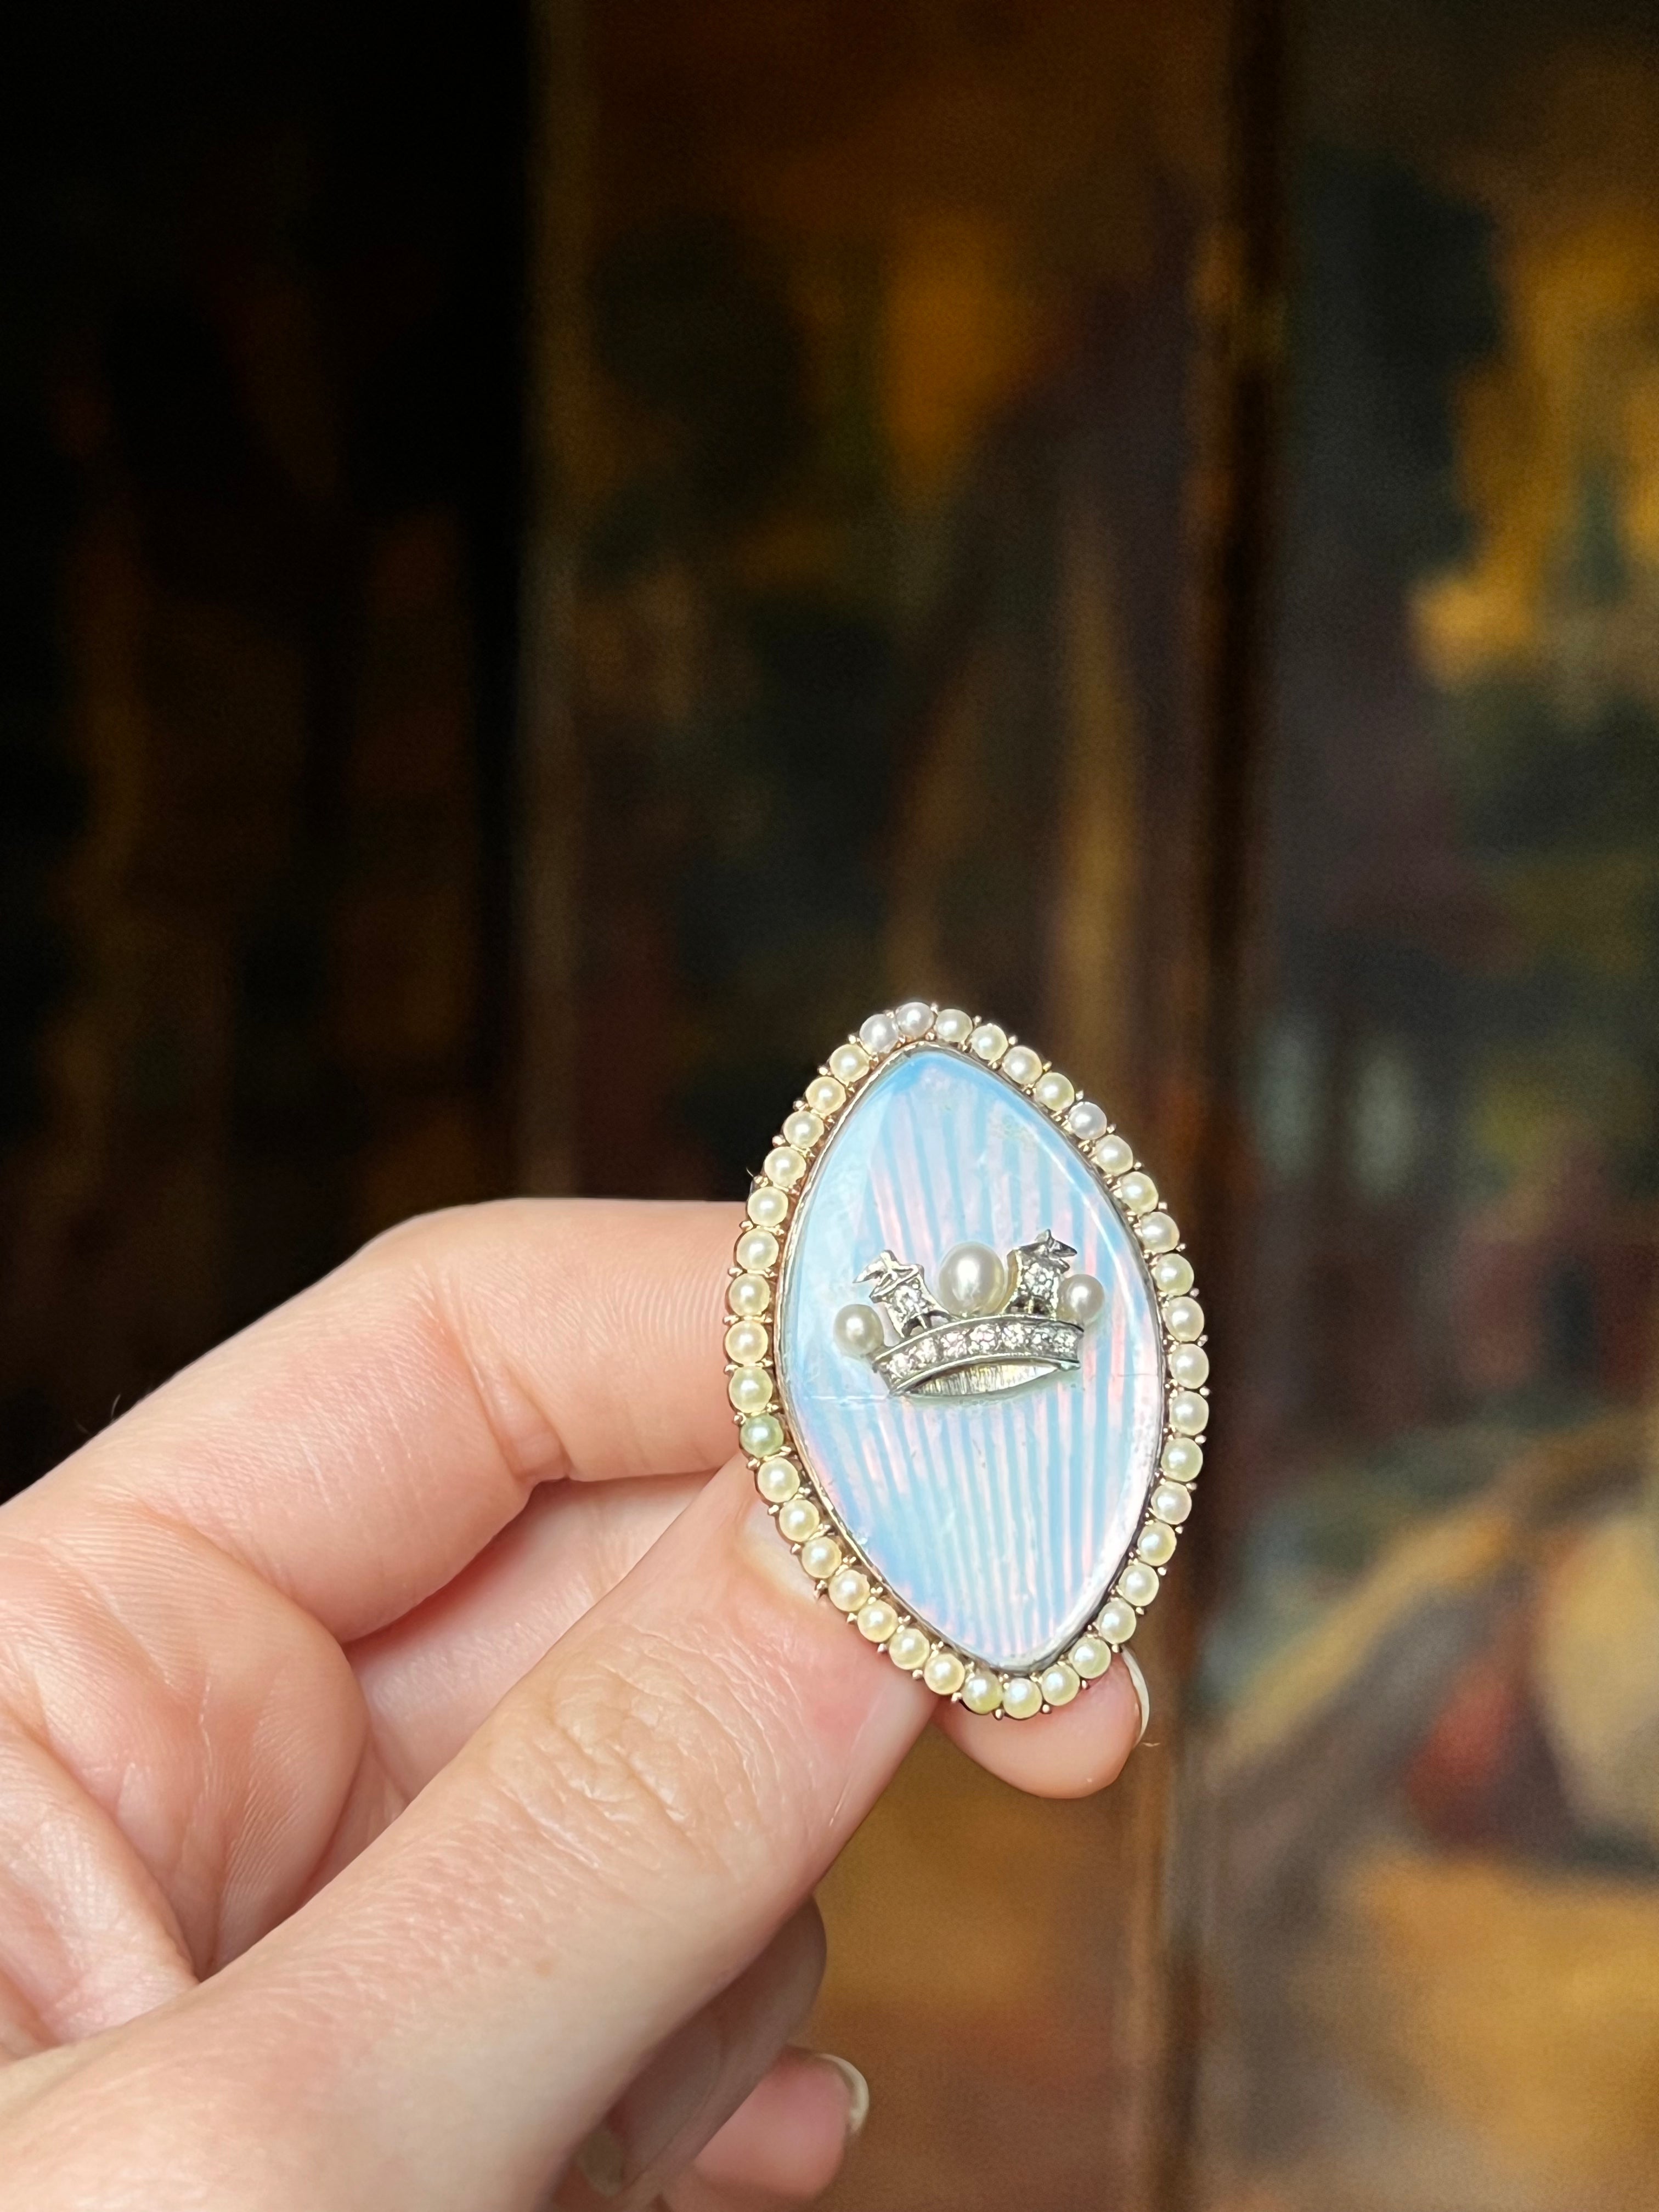 Victorian Diamond and Pearl British Naval Crown Brooch